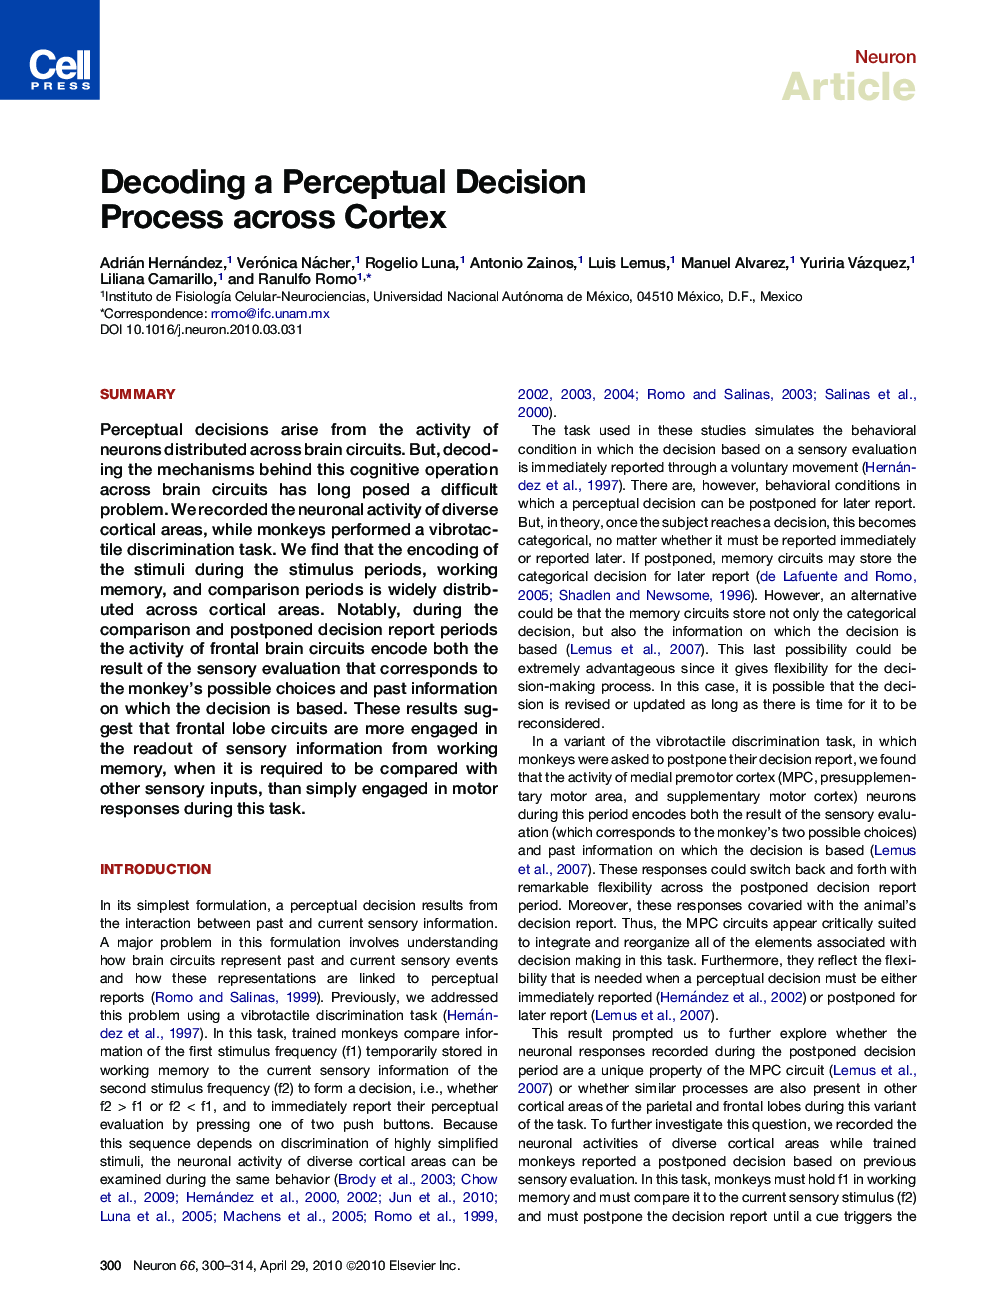 Decoding a Perceptual Decision Process across Cortex